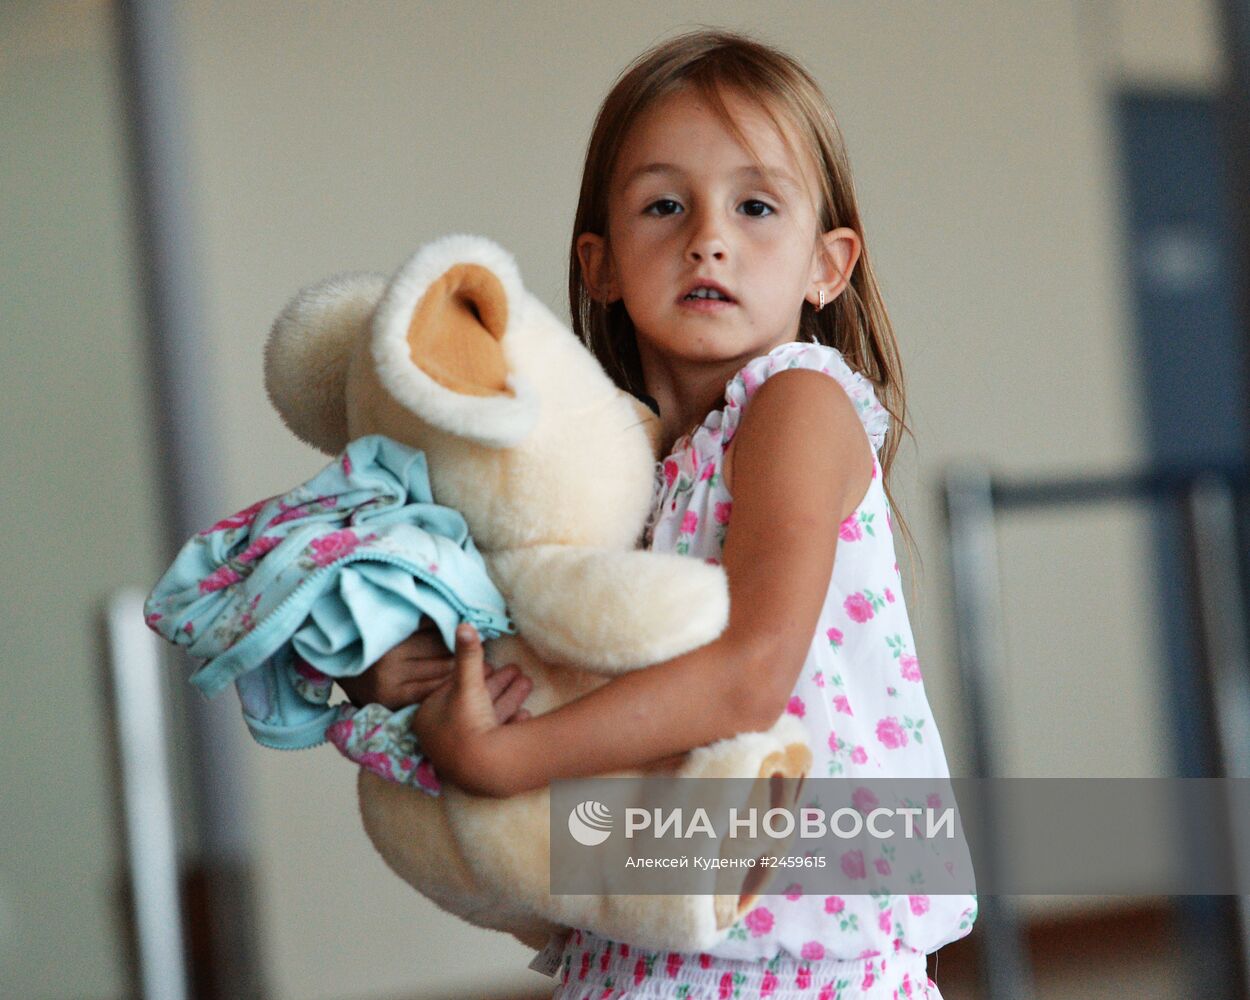 Борт МЧС доставил в Москву украинских беженцев